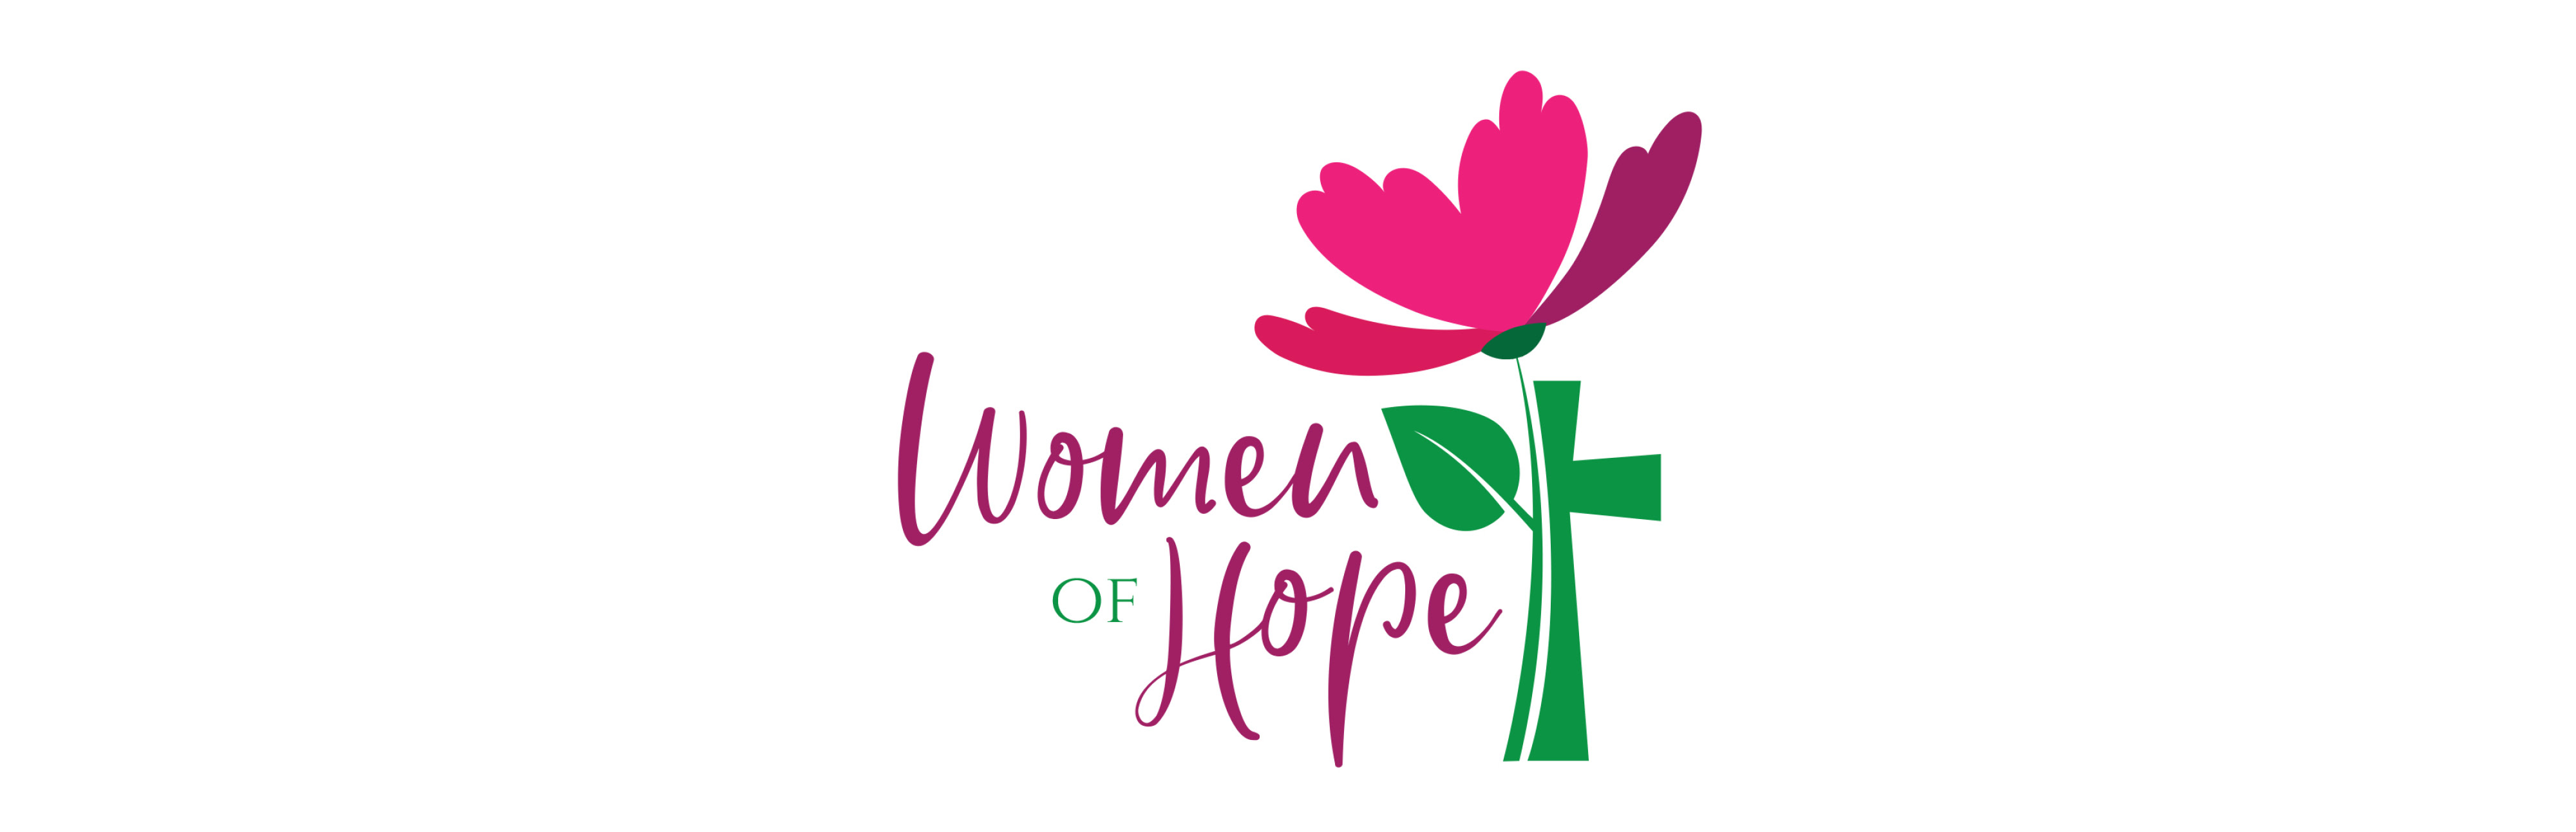 SOH Woman of Hope Web Banner.jpg